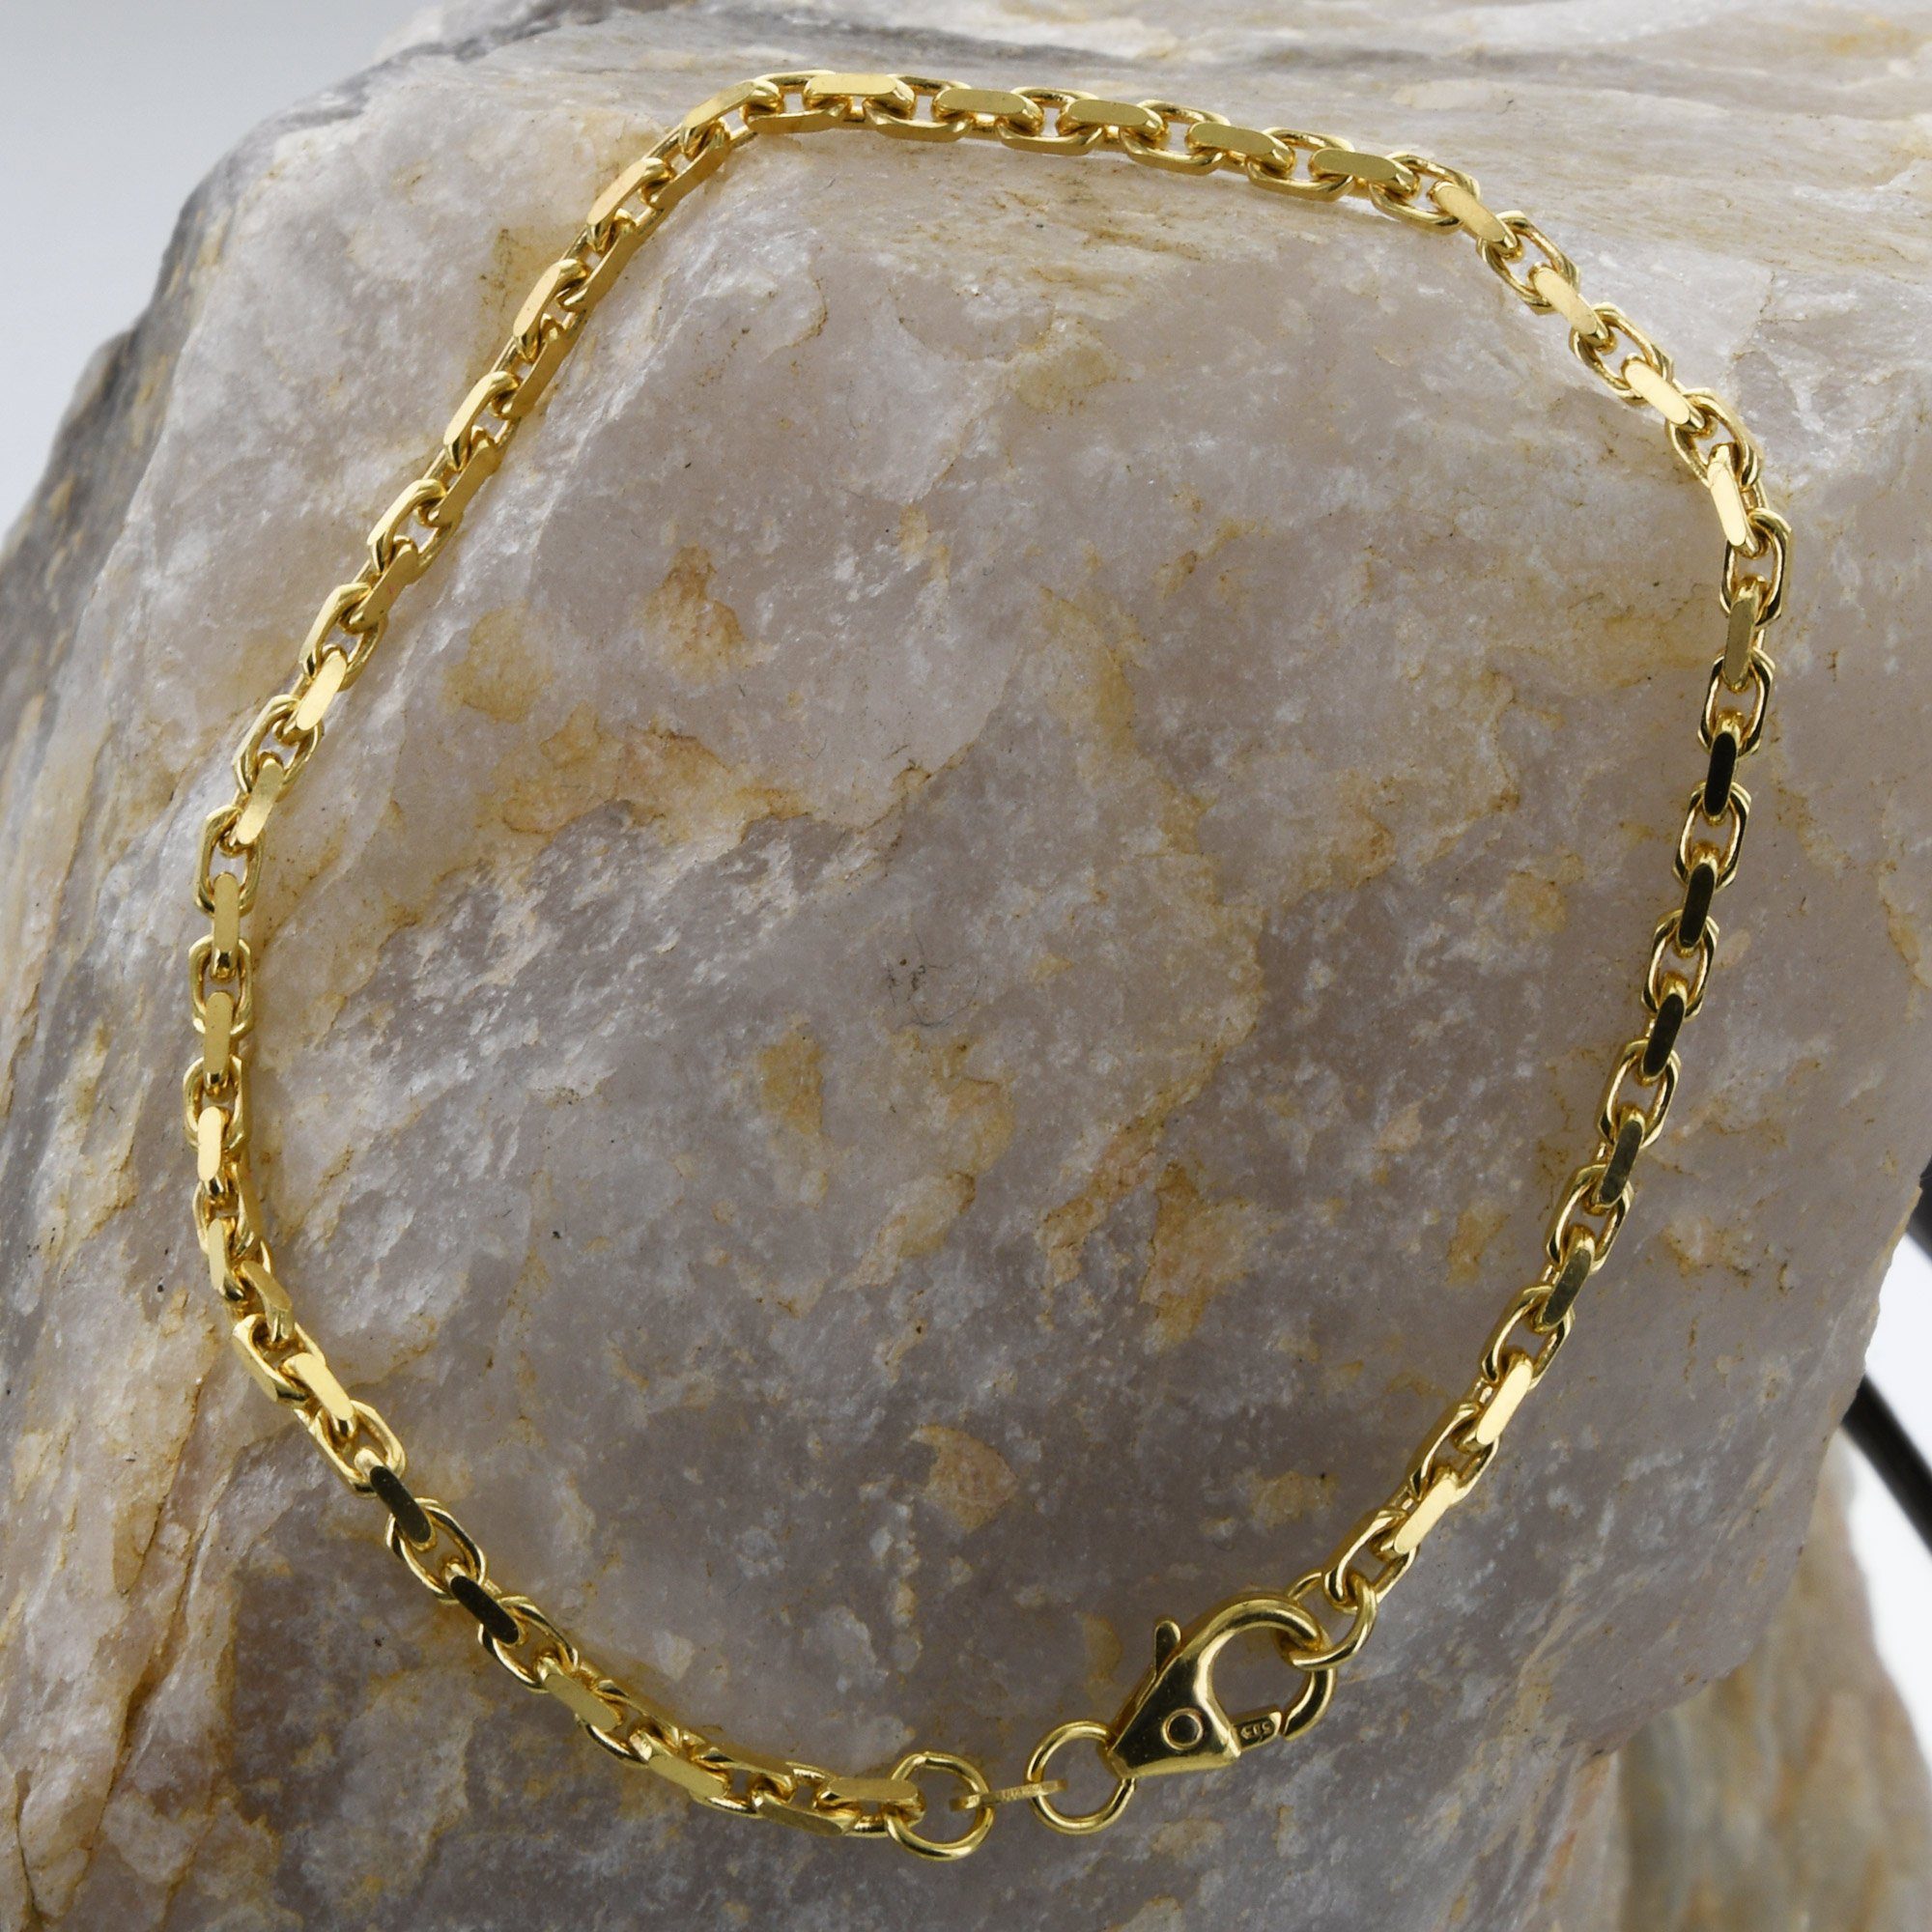 Herren Schmuck HOPLO Goldkette 2,5 mm 21 cm 585 - 14 Karat Gold Armkette Ankerkette diamantiert massiv Gold hochwertige Goldkett